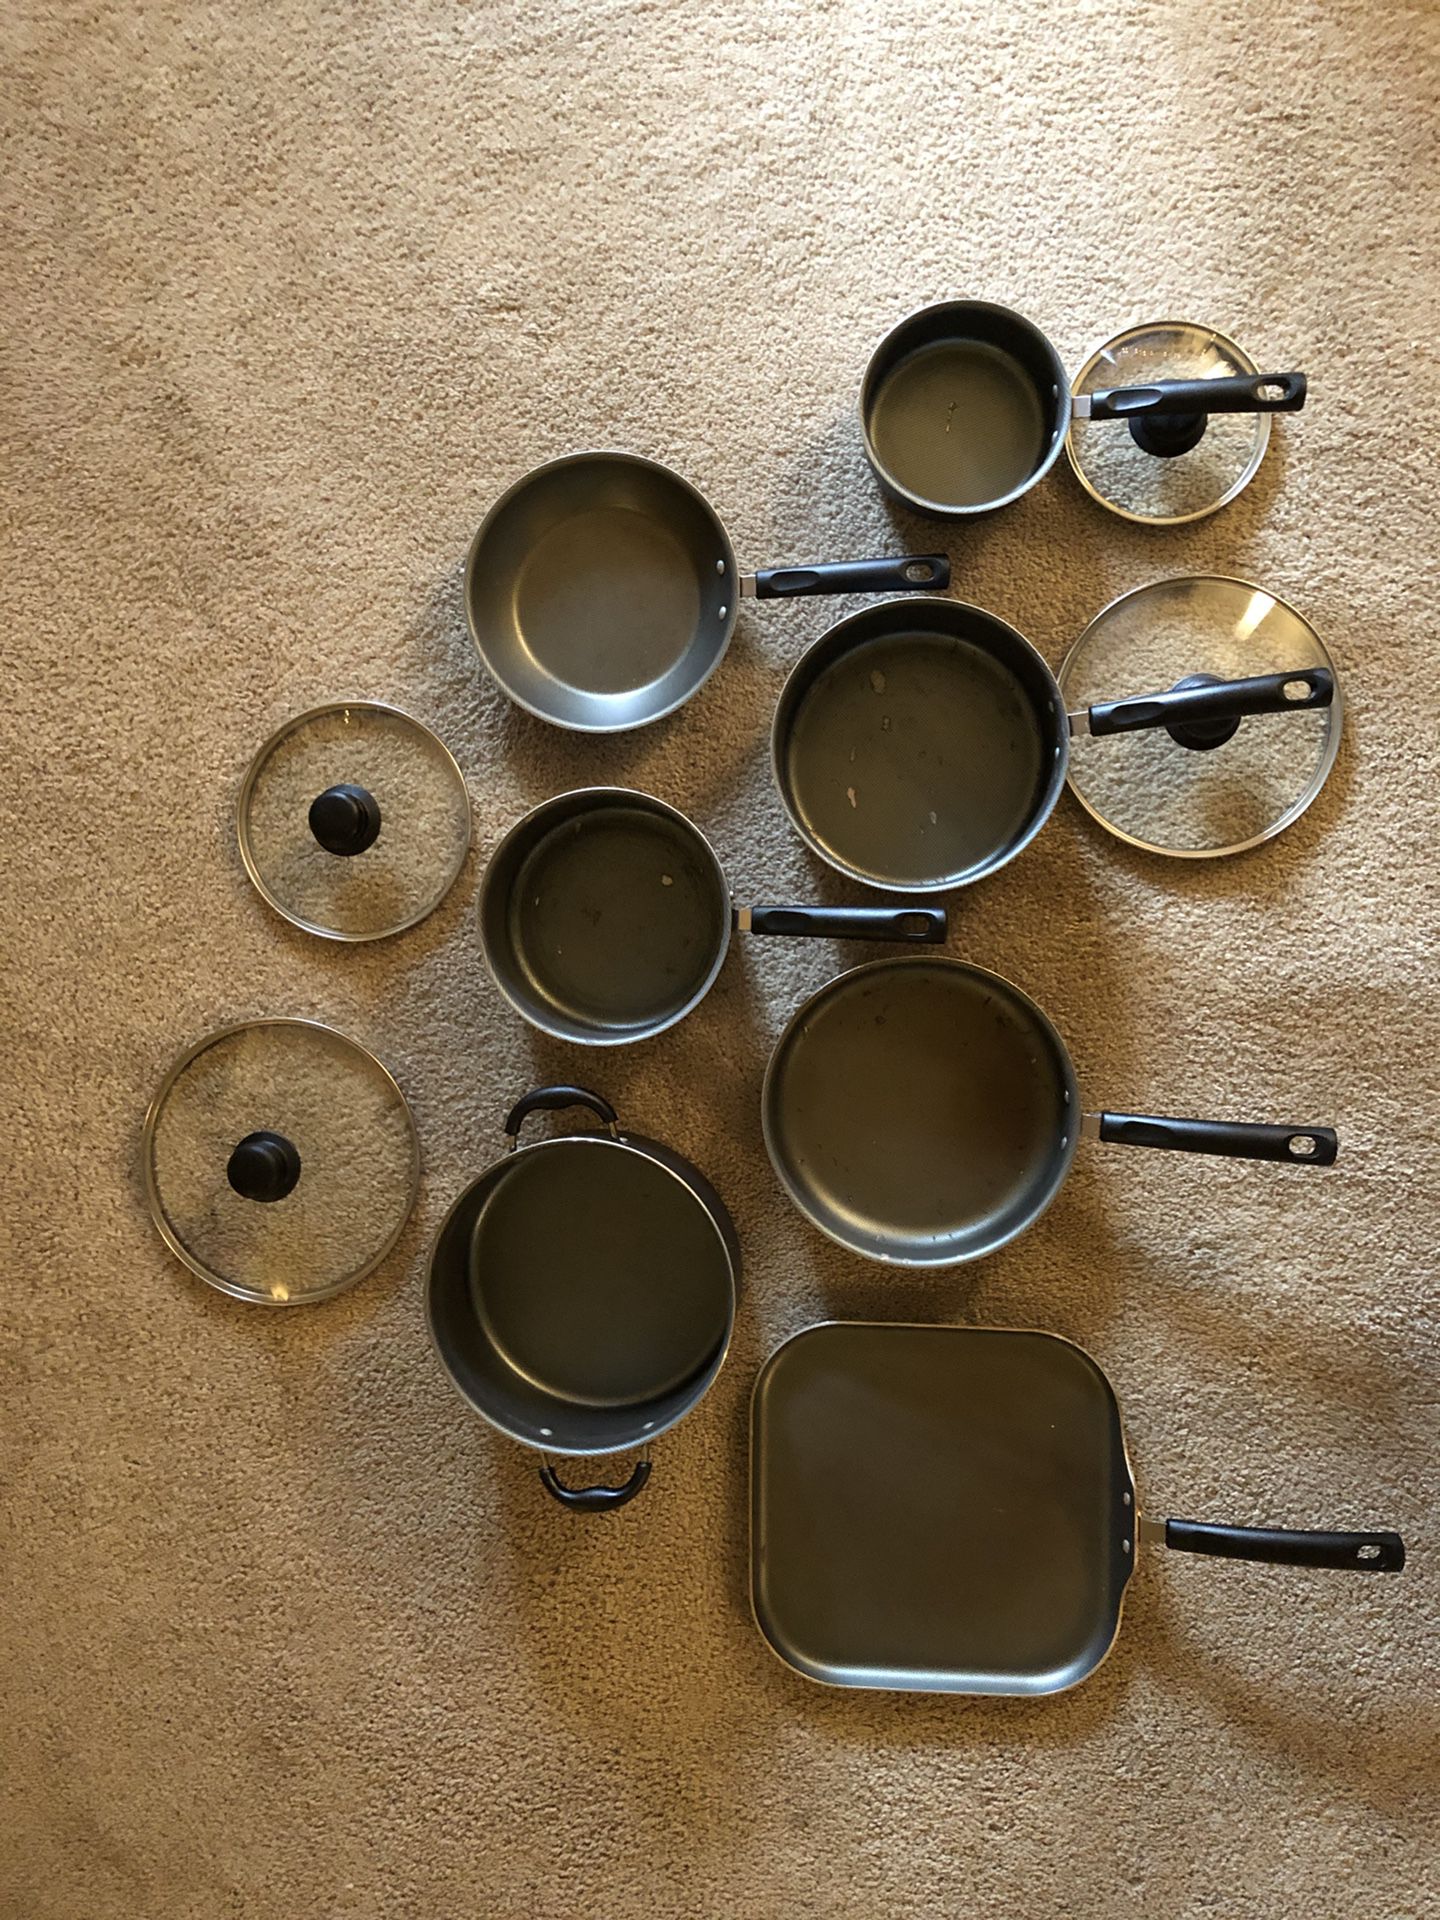 Used pots, pans, kitchen tools, etc.